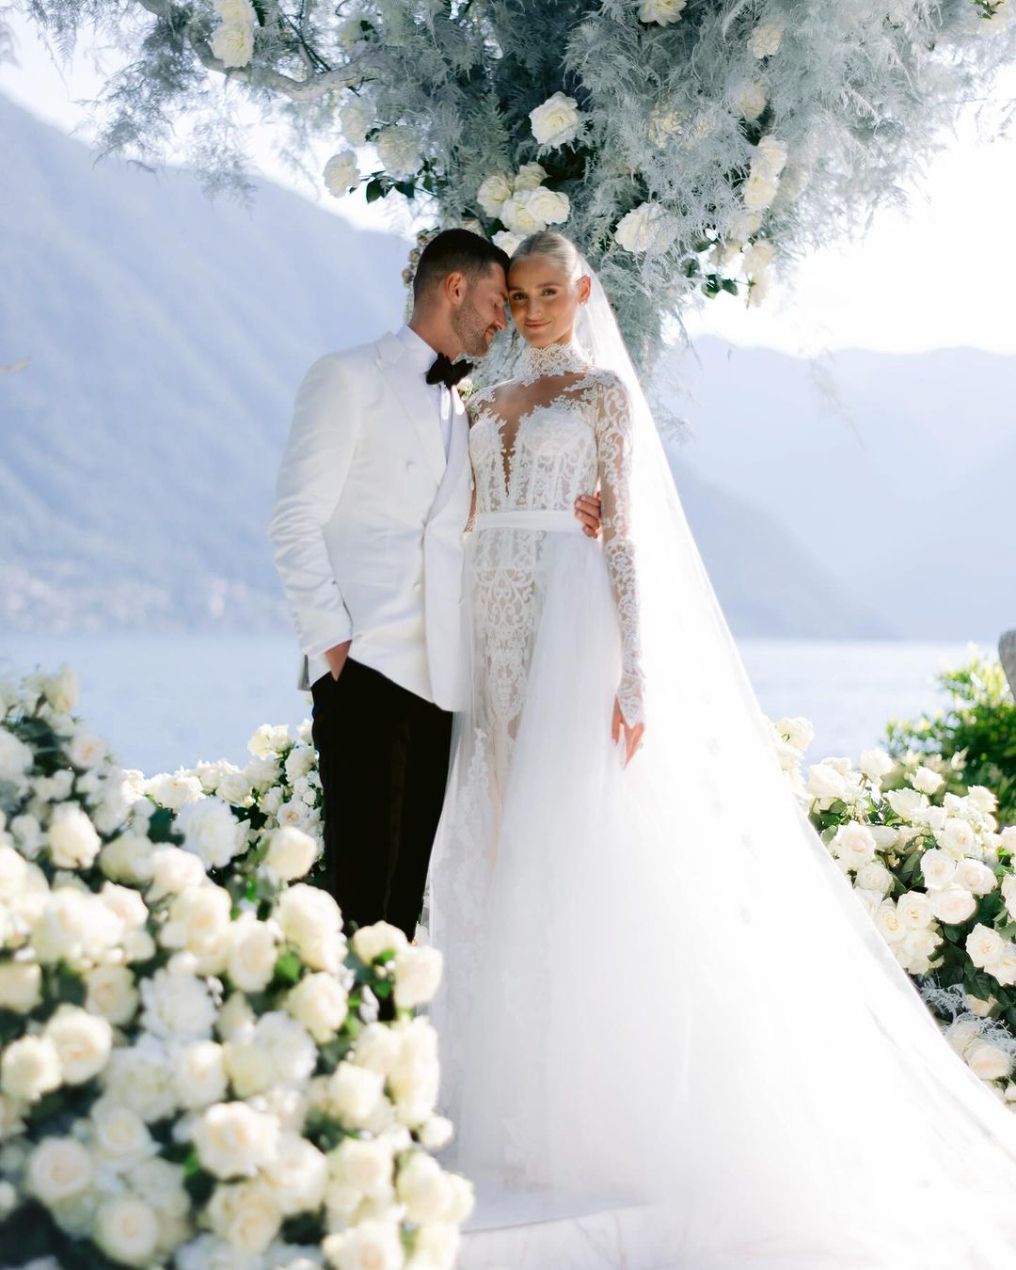 The Lake Como Wedding Planner photo